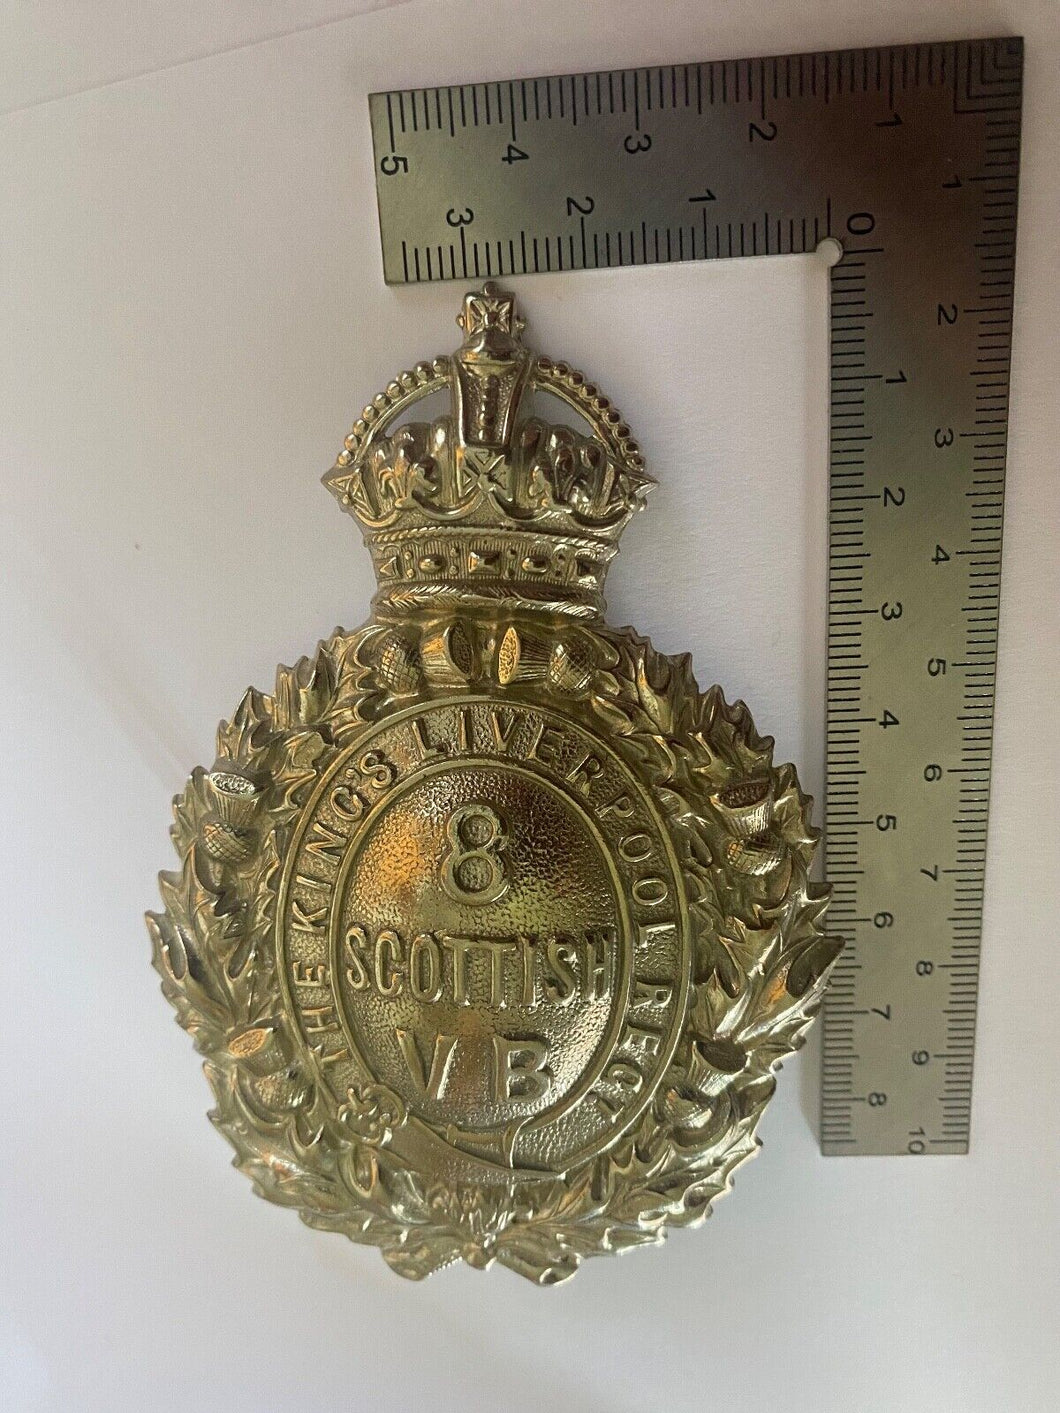 Reproduction 8th Scottish Volunteer Battalion Large Cap Badge